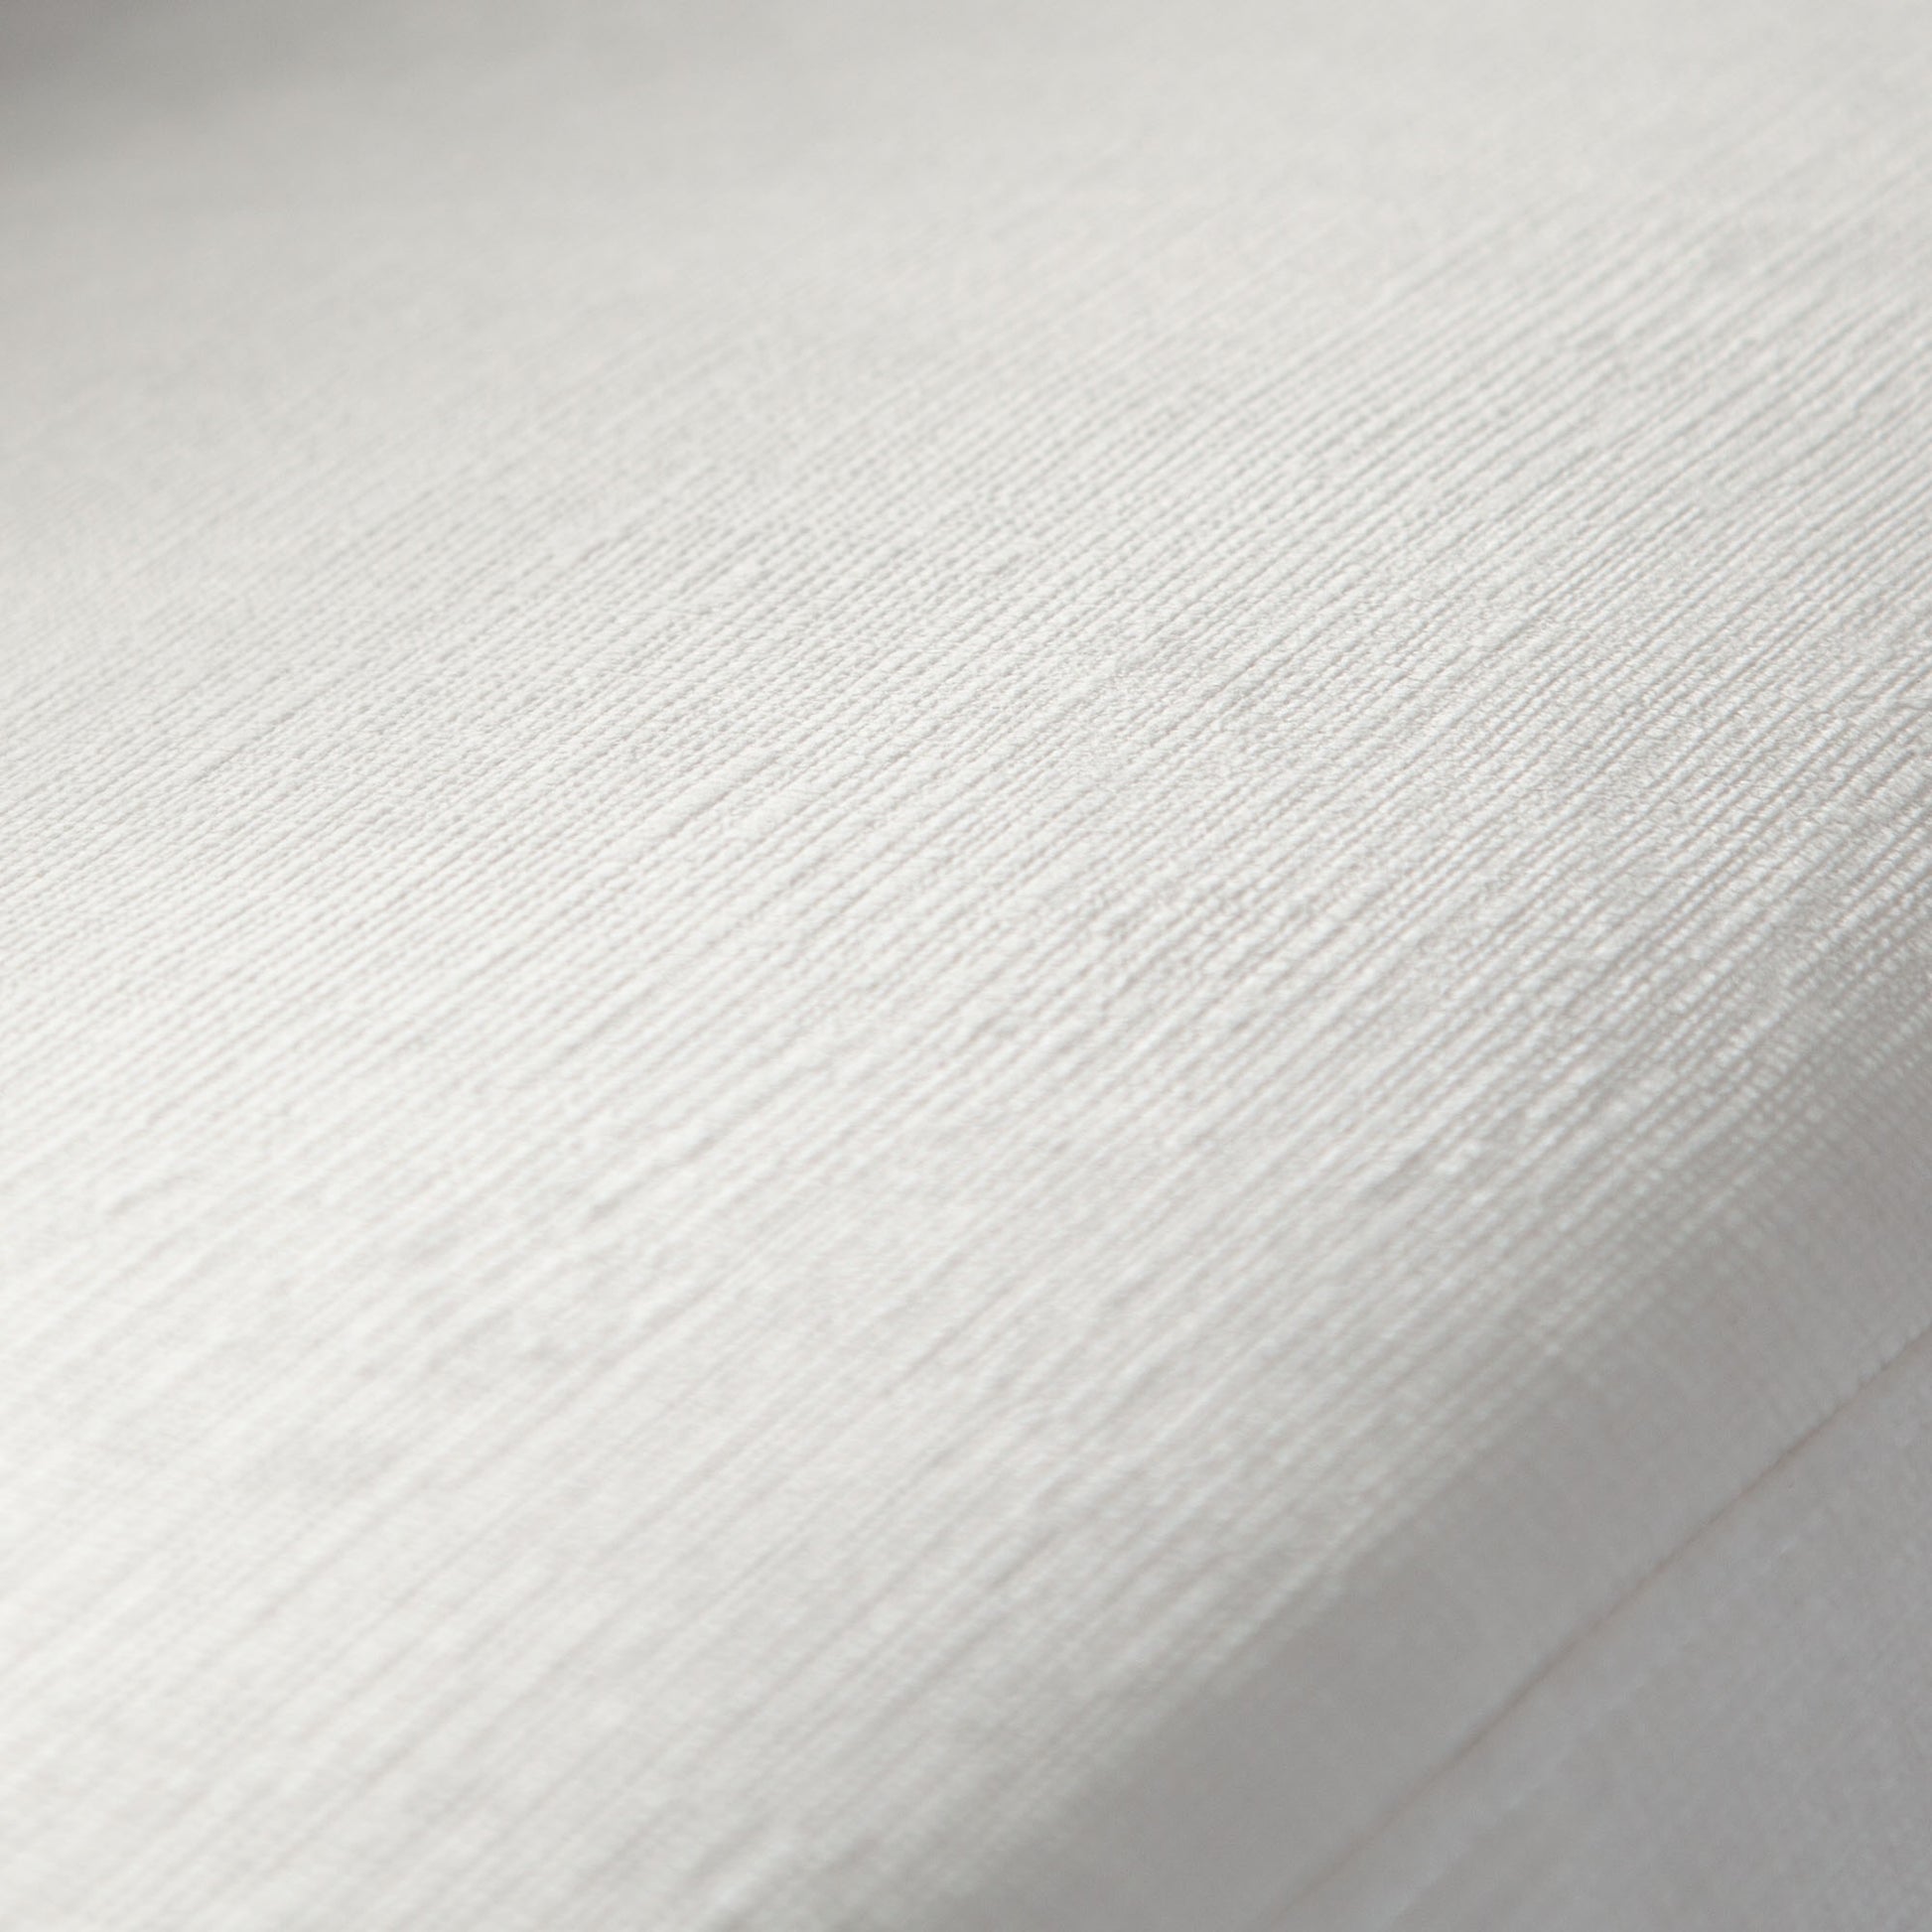 Muse Sofa White Fabric